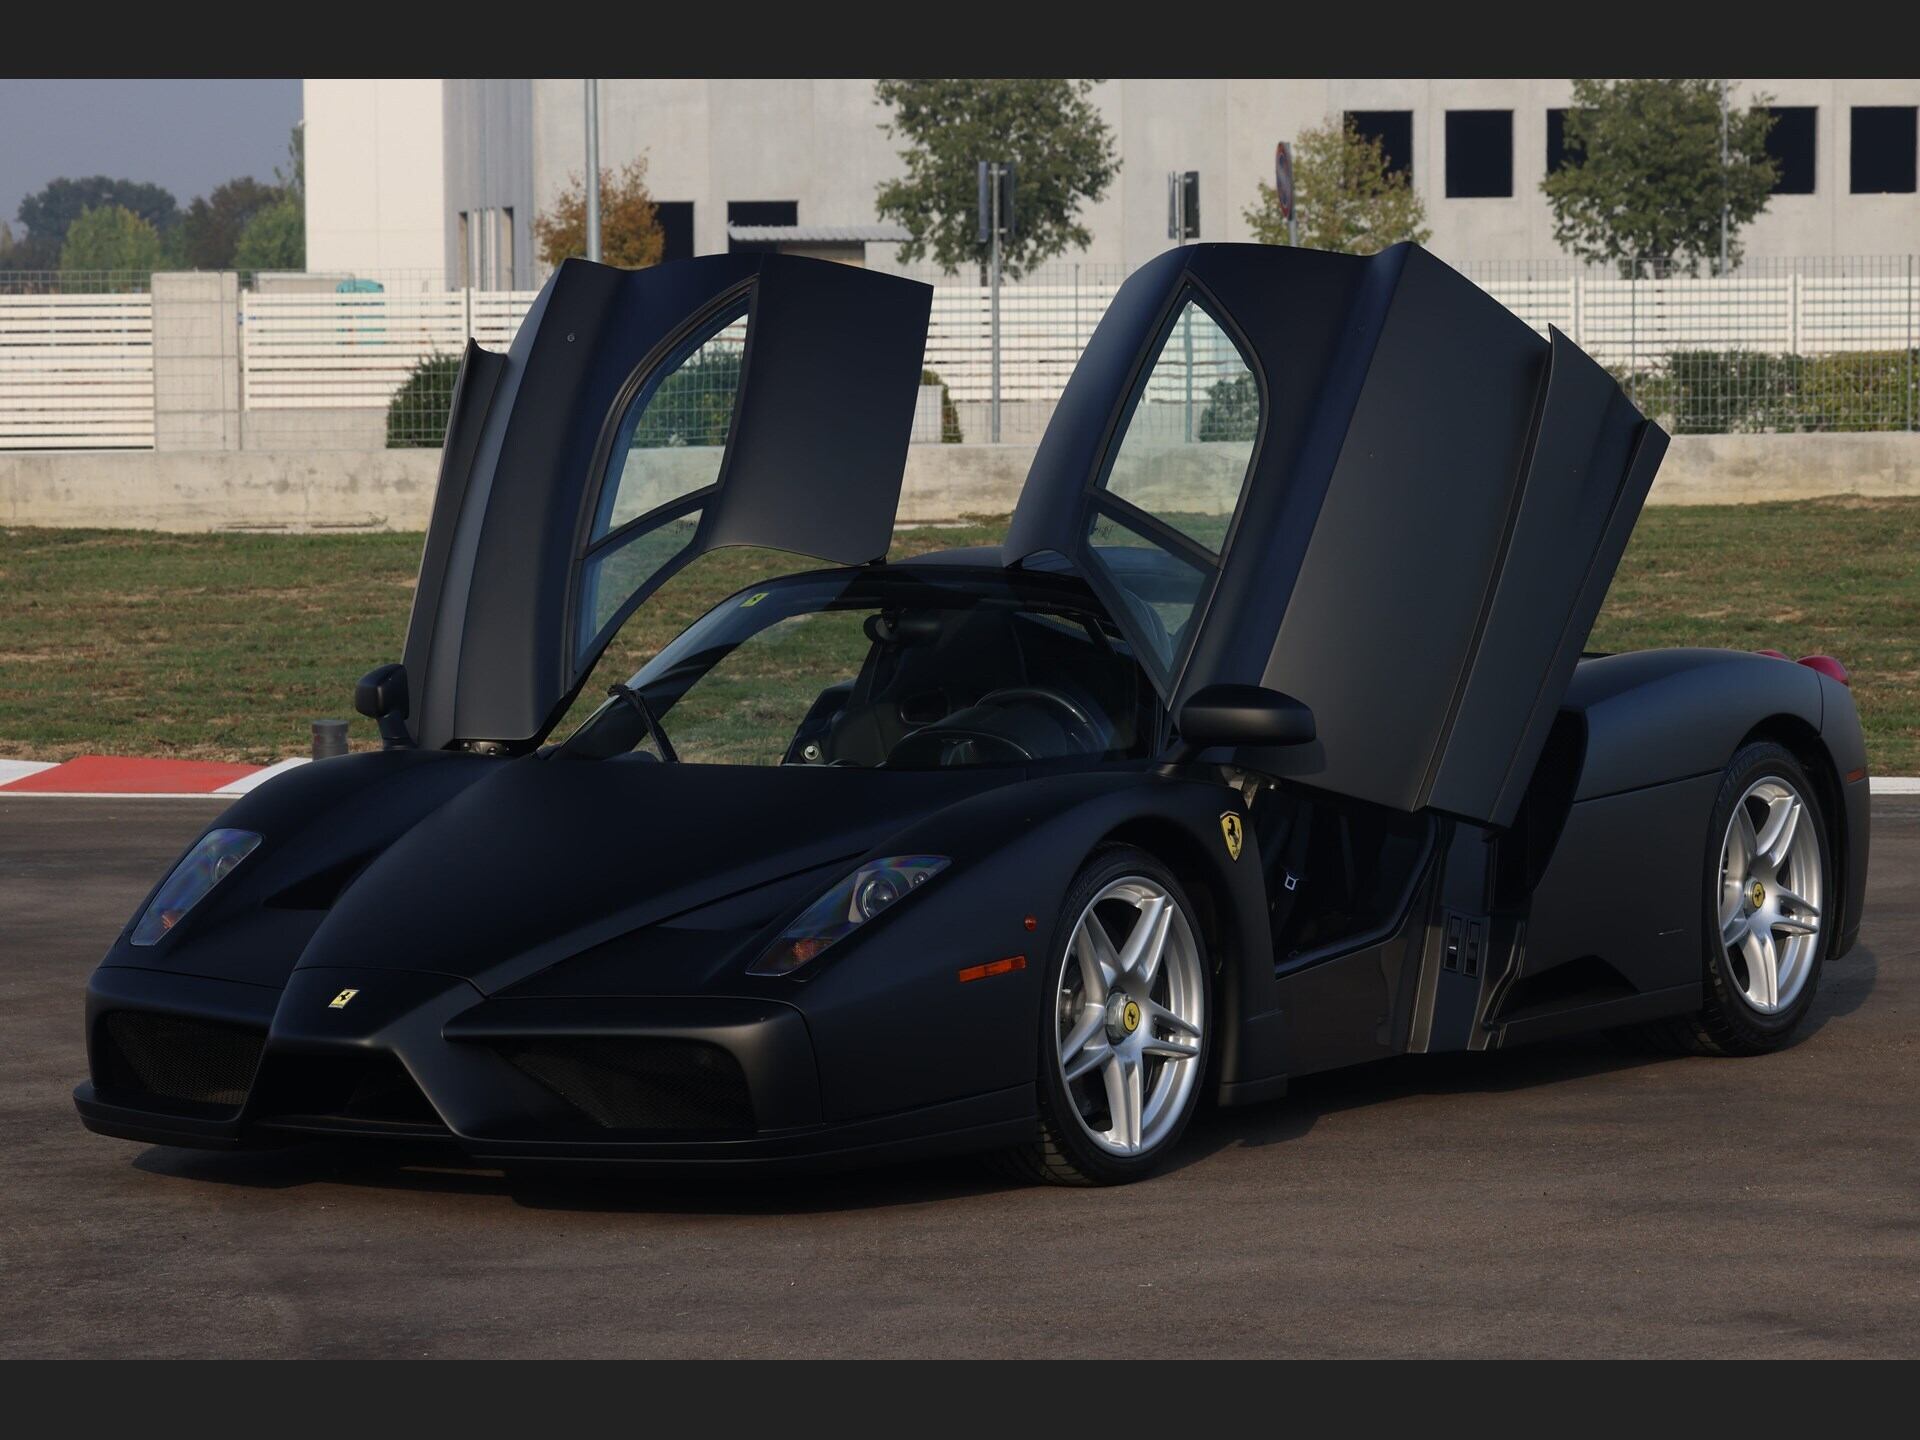 imagen 4 de Sale a subasta un Ferrari Enzo negro mate único excepcional.